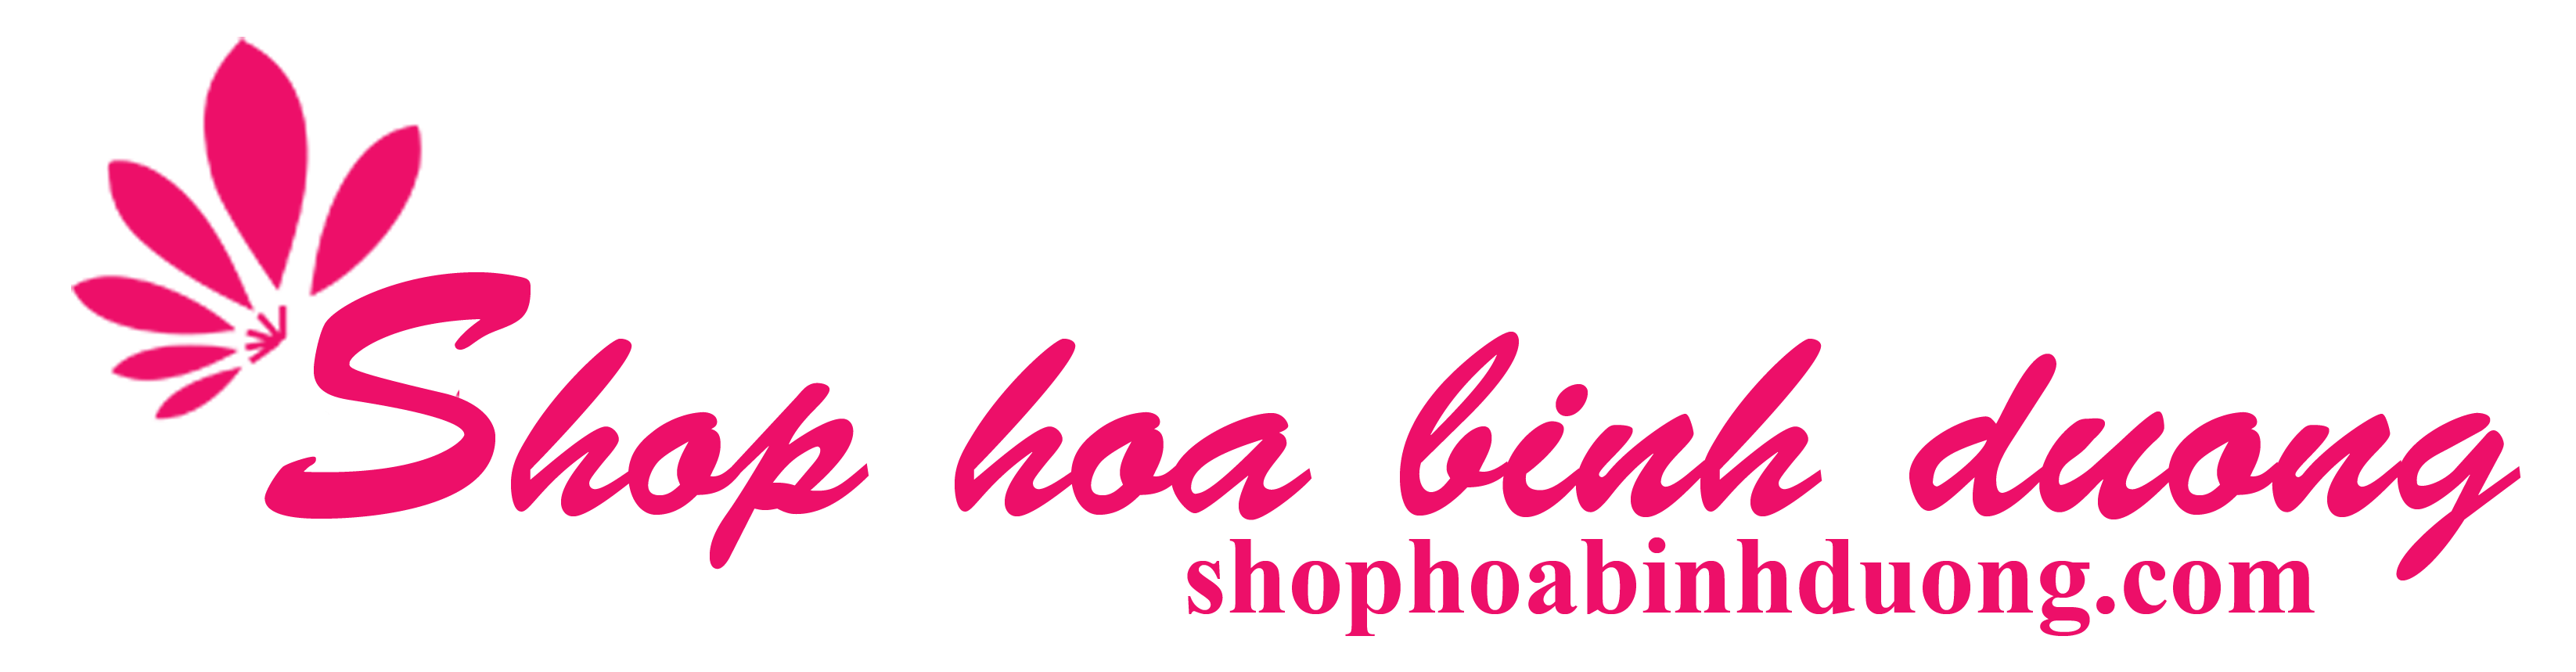 shophoabinhduong.com